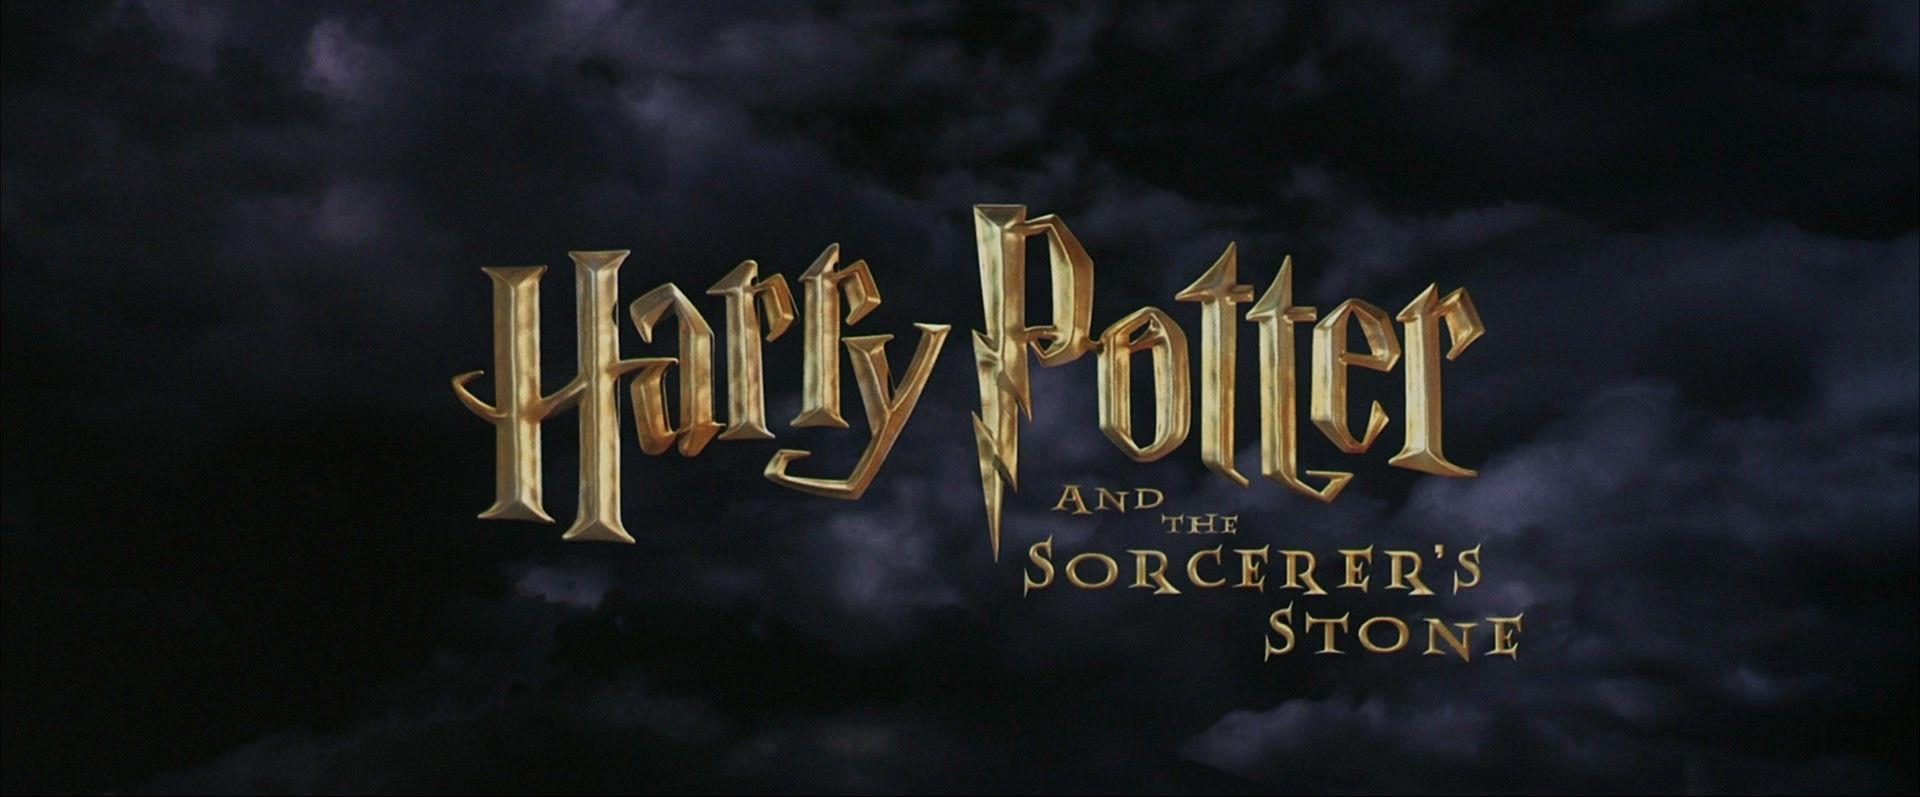 Harry Potter Sorcerer's Stone Logo - Image - Harry Potter and the Sorcerer's Stone Logo.jpg | Film and ...